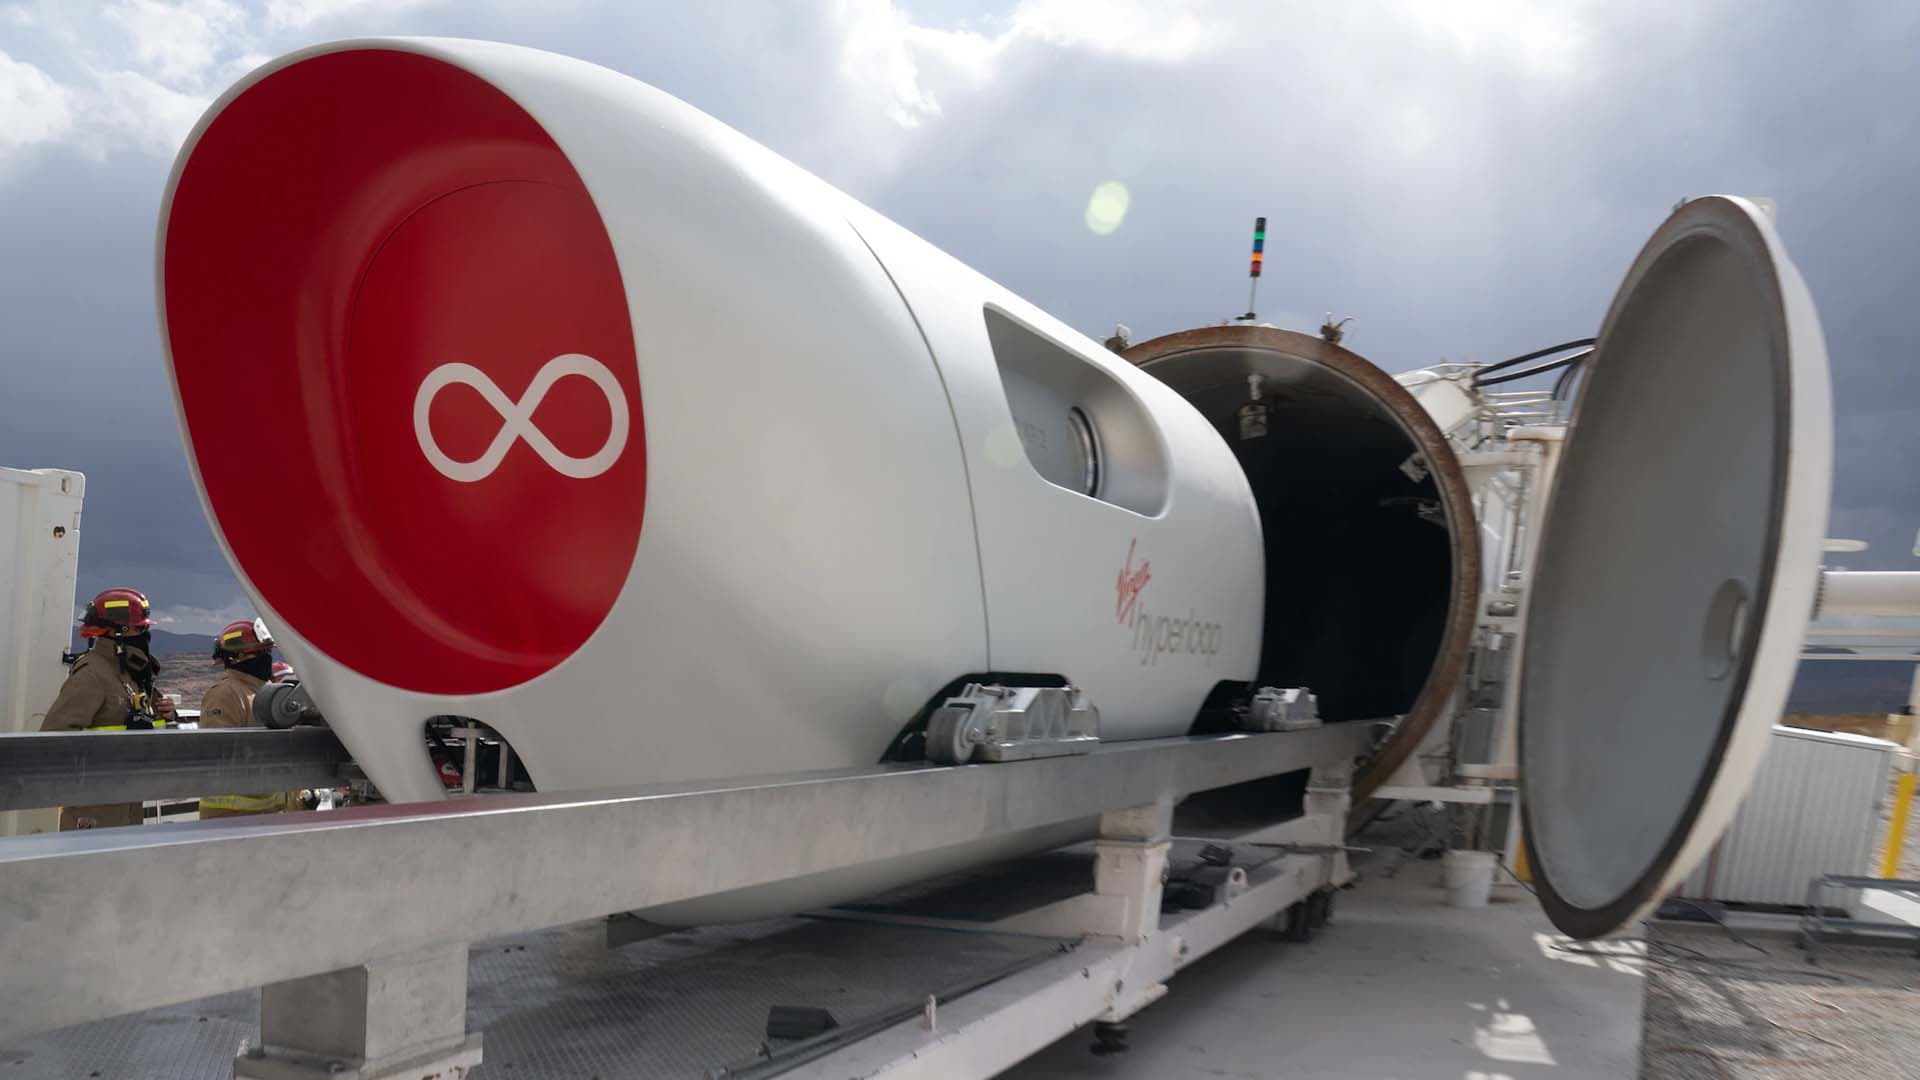 Virgin Hyperloop Won’t Provide Passenger Travel. Here’s Why That Matters